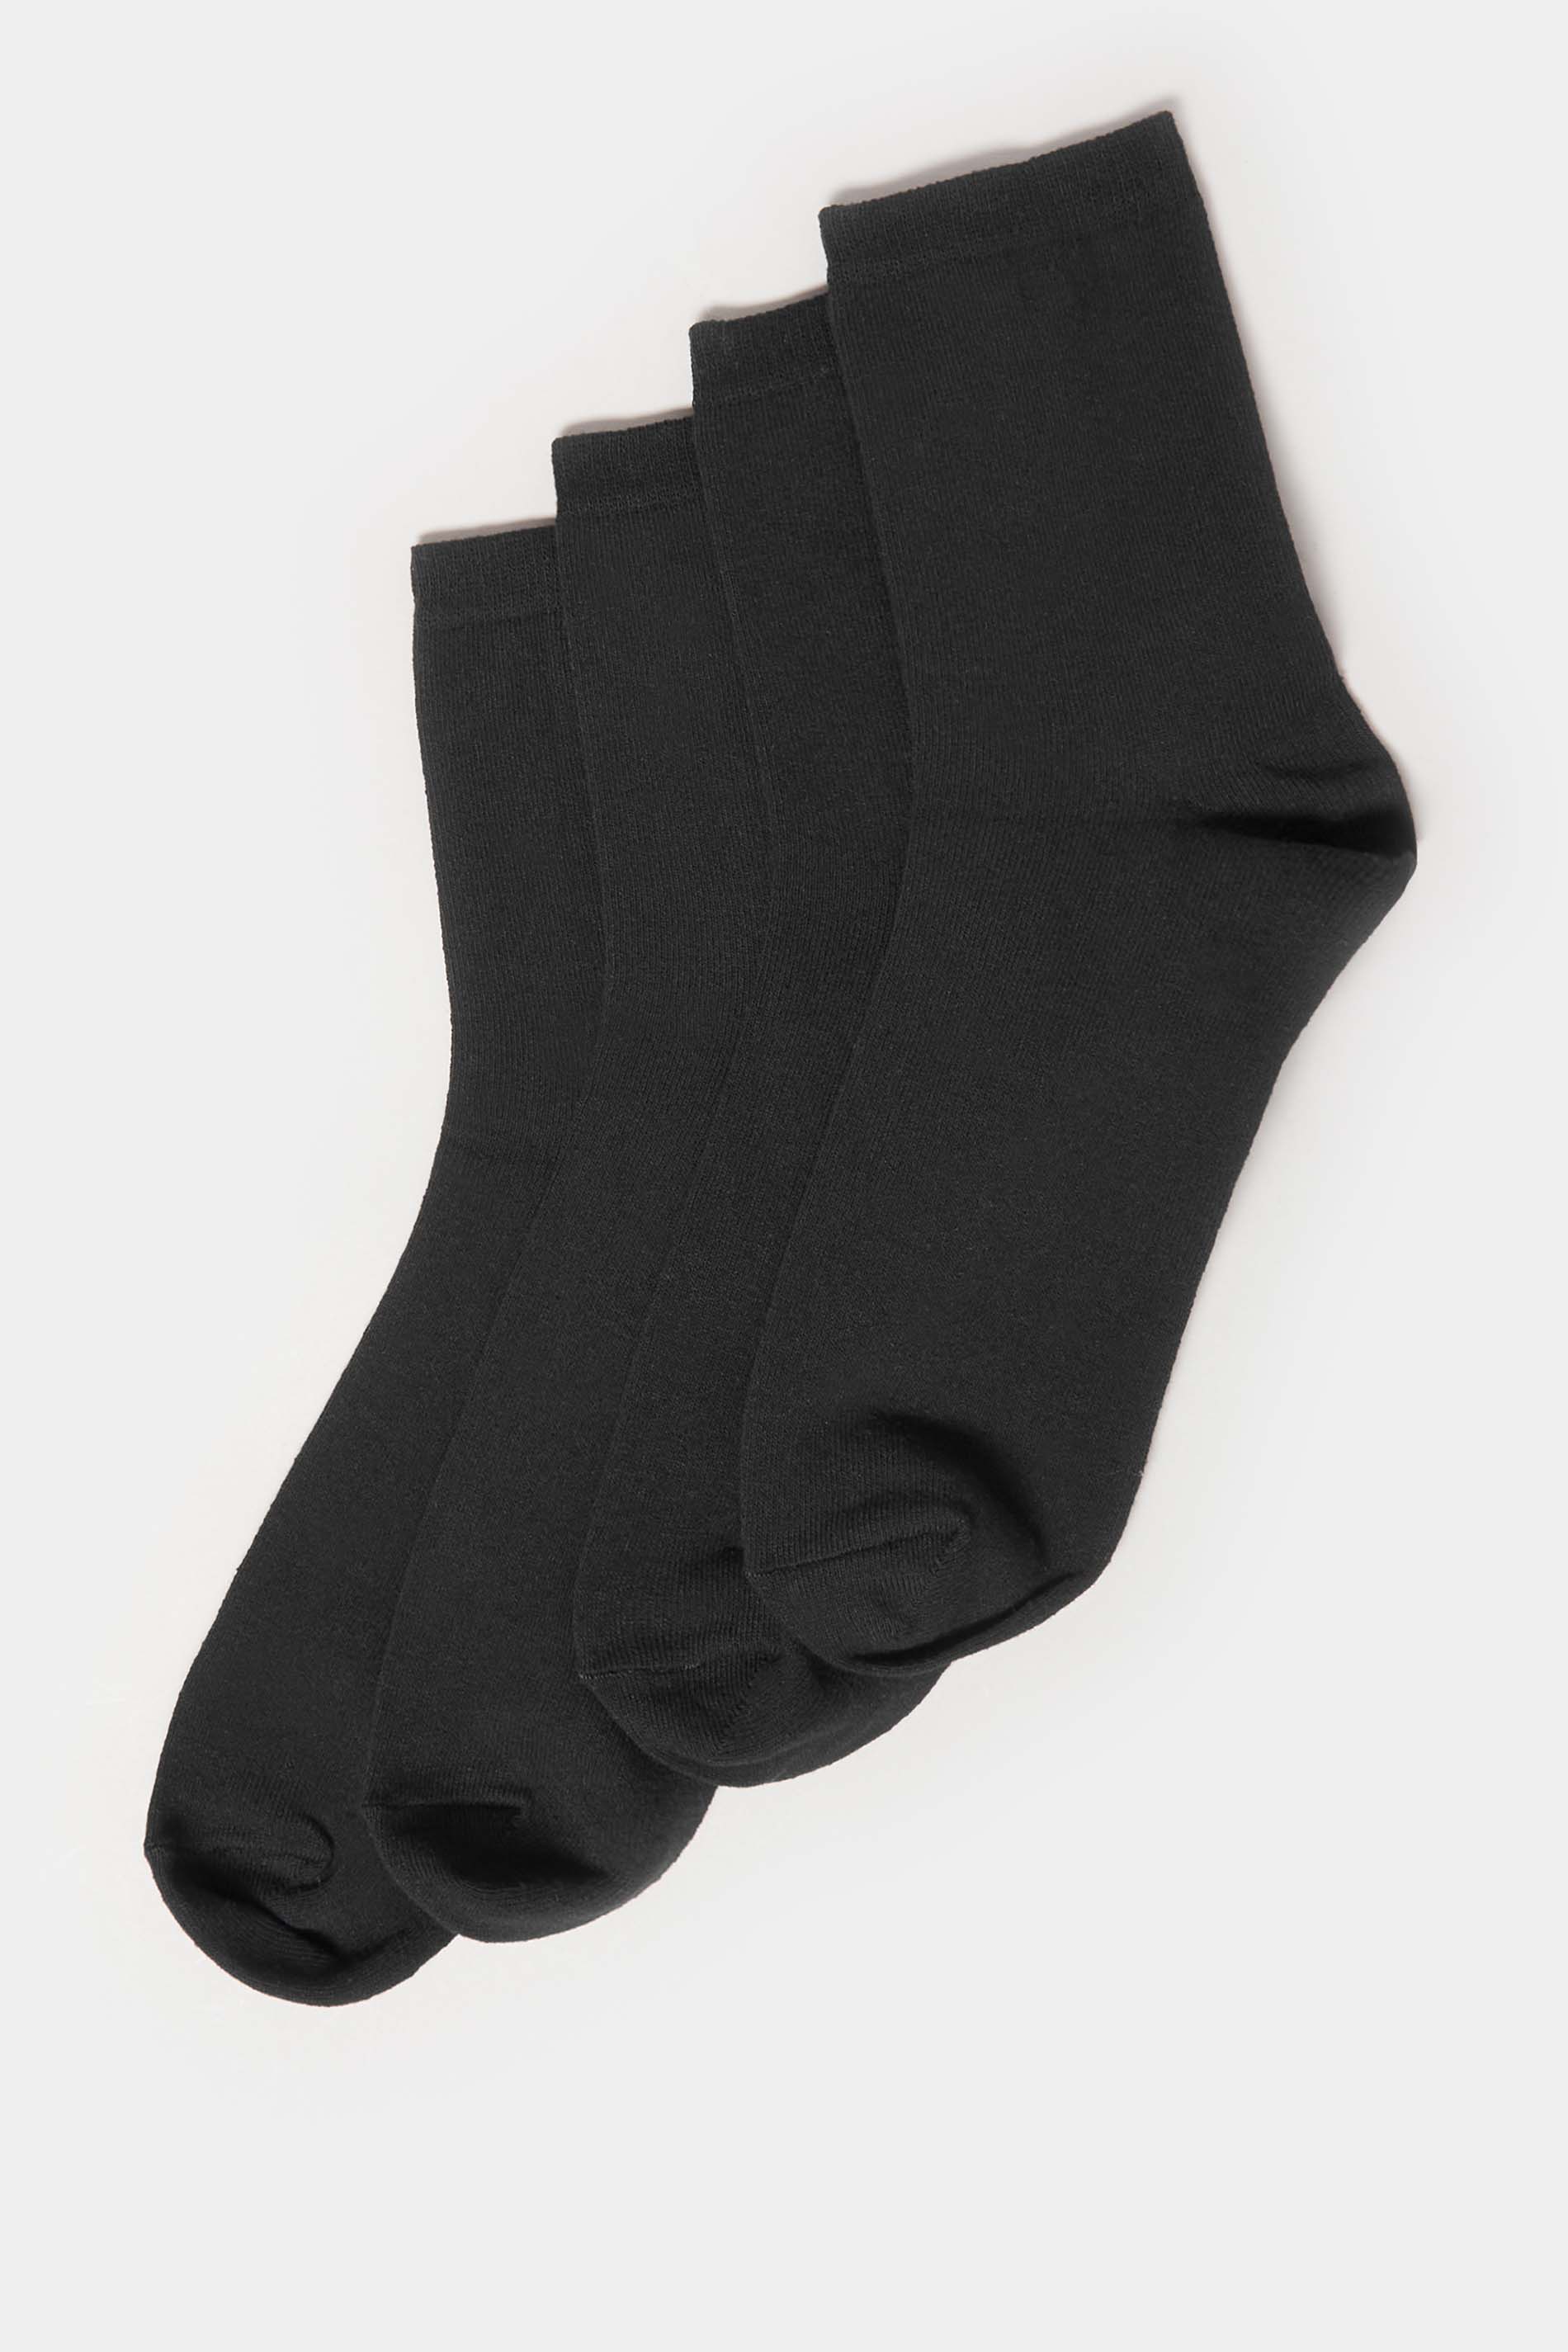 LTS 4 PACK Black Plain Ankle Socks | Long Tall Sally